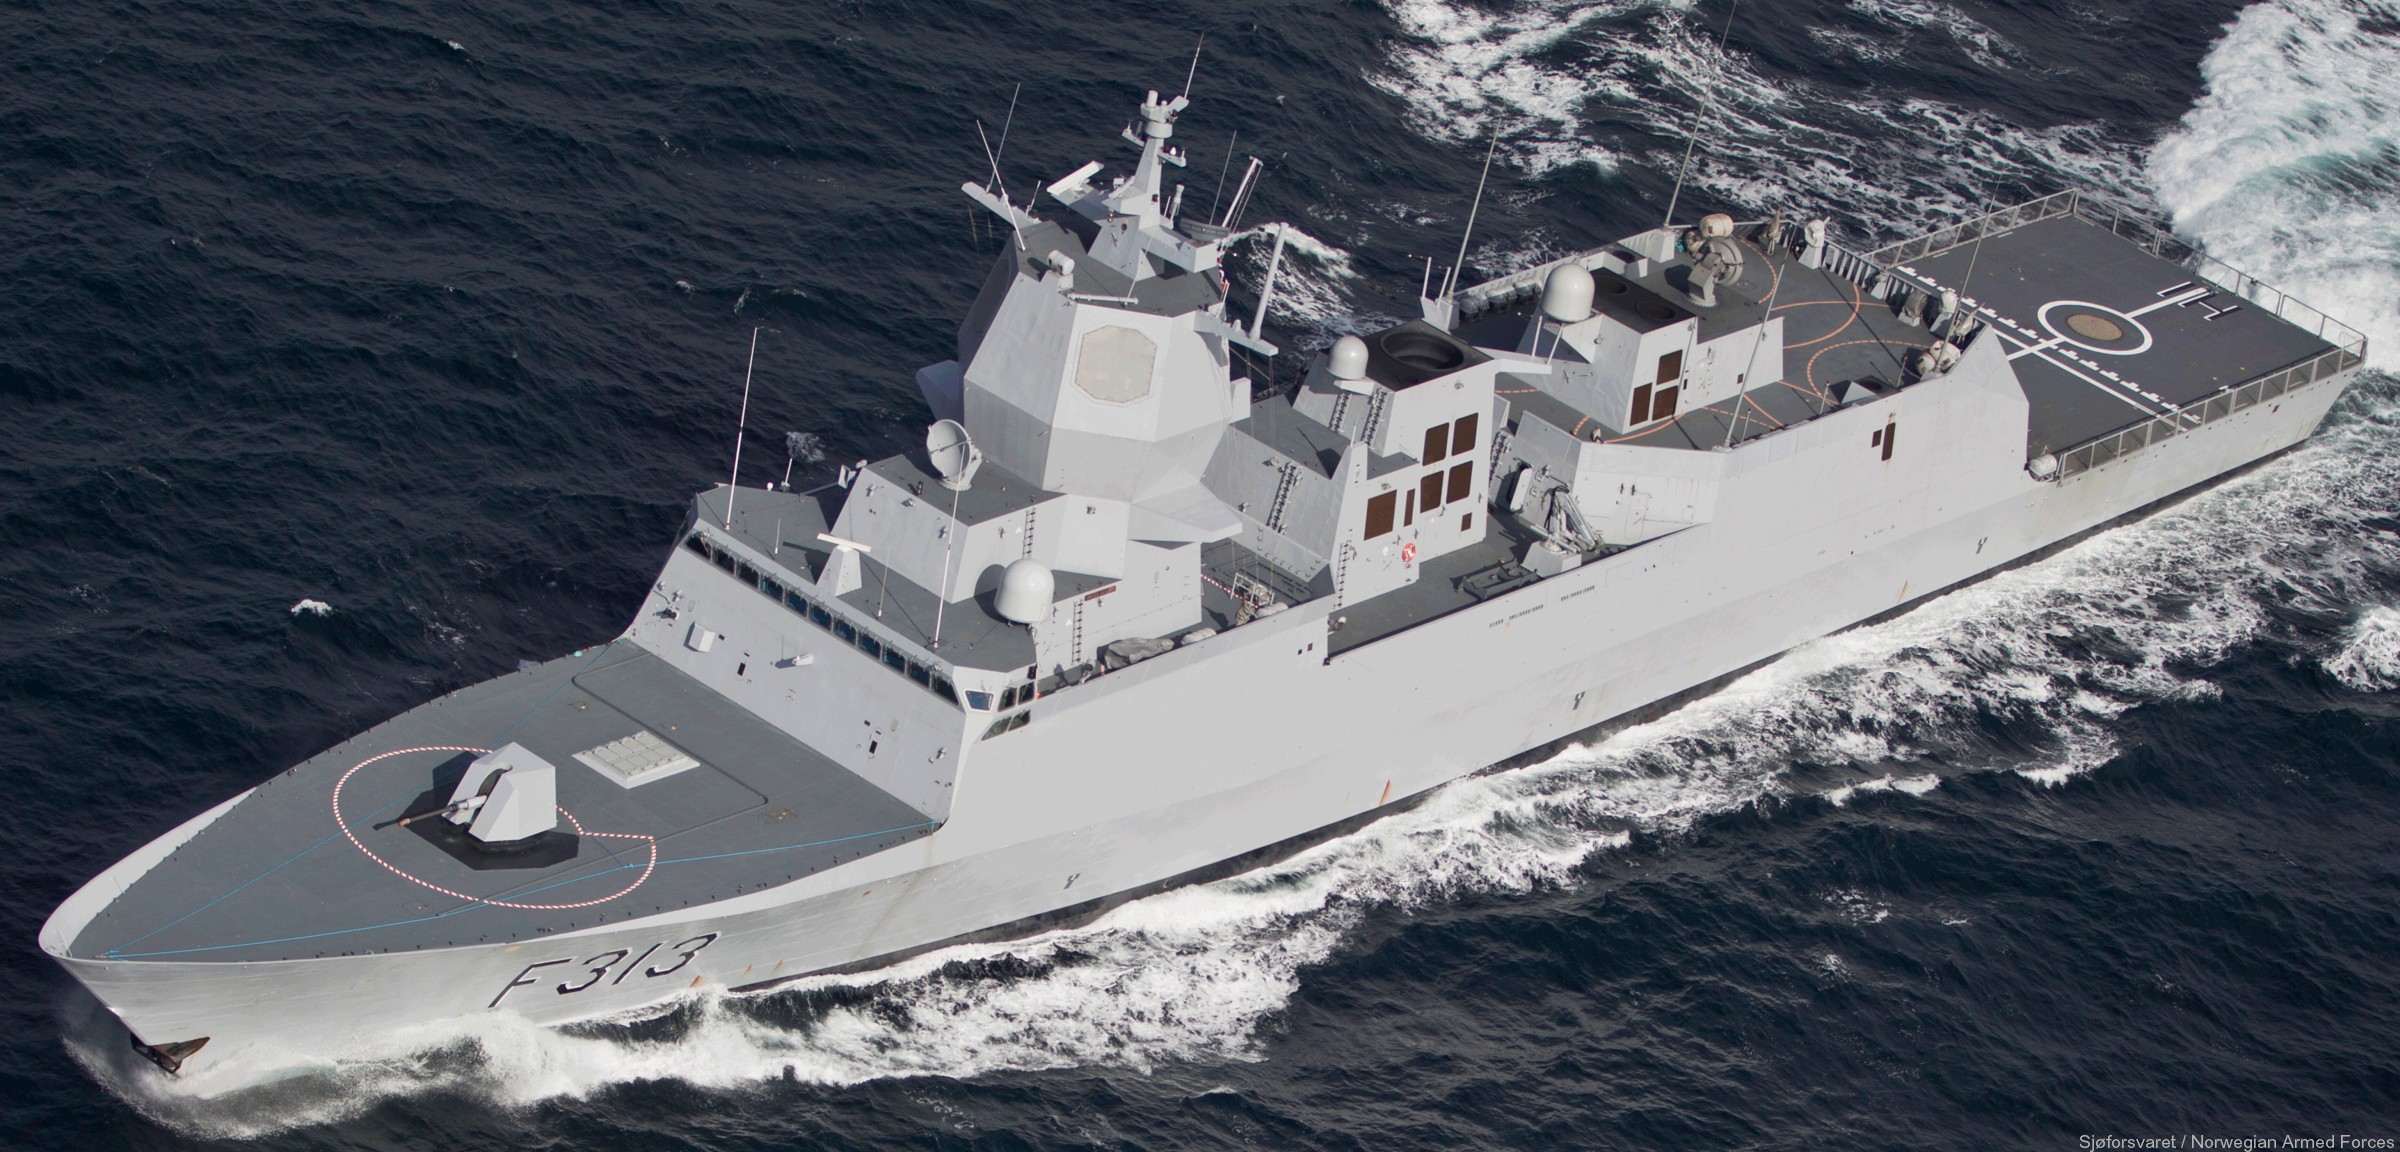 f-313 helge ingstad hnoms knm nansen class frigate royal norwegian navy 43